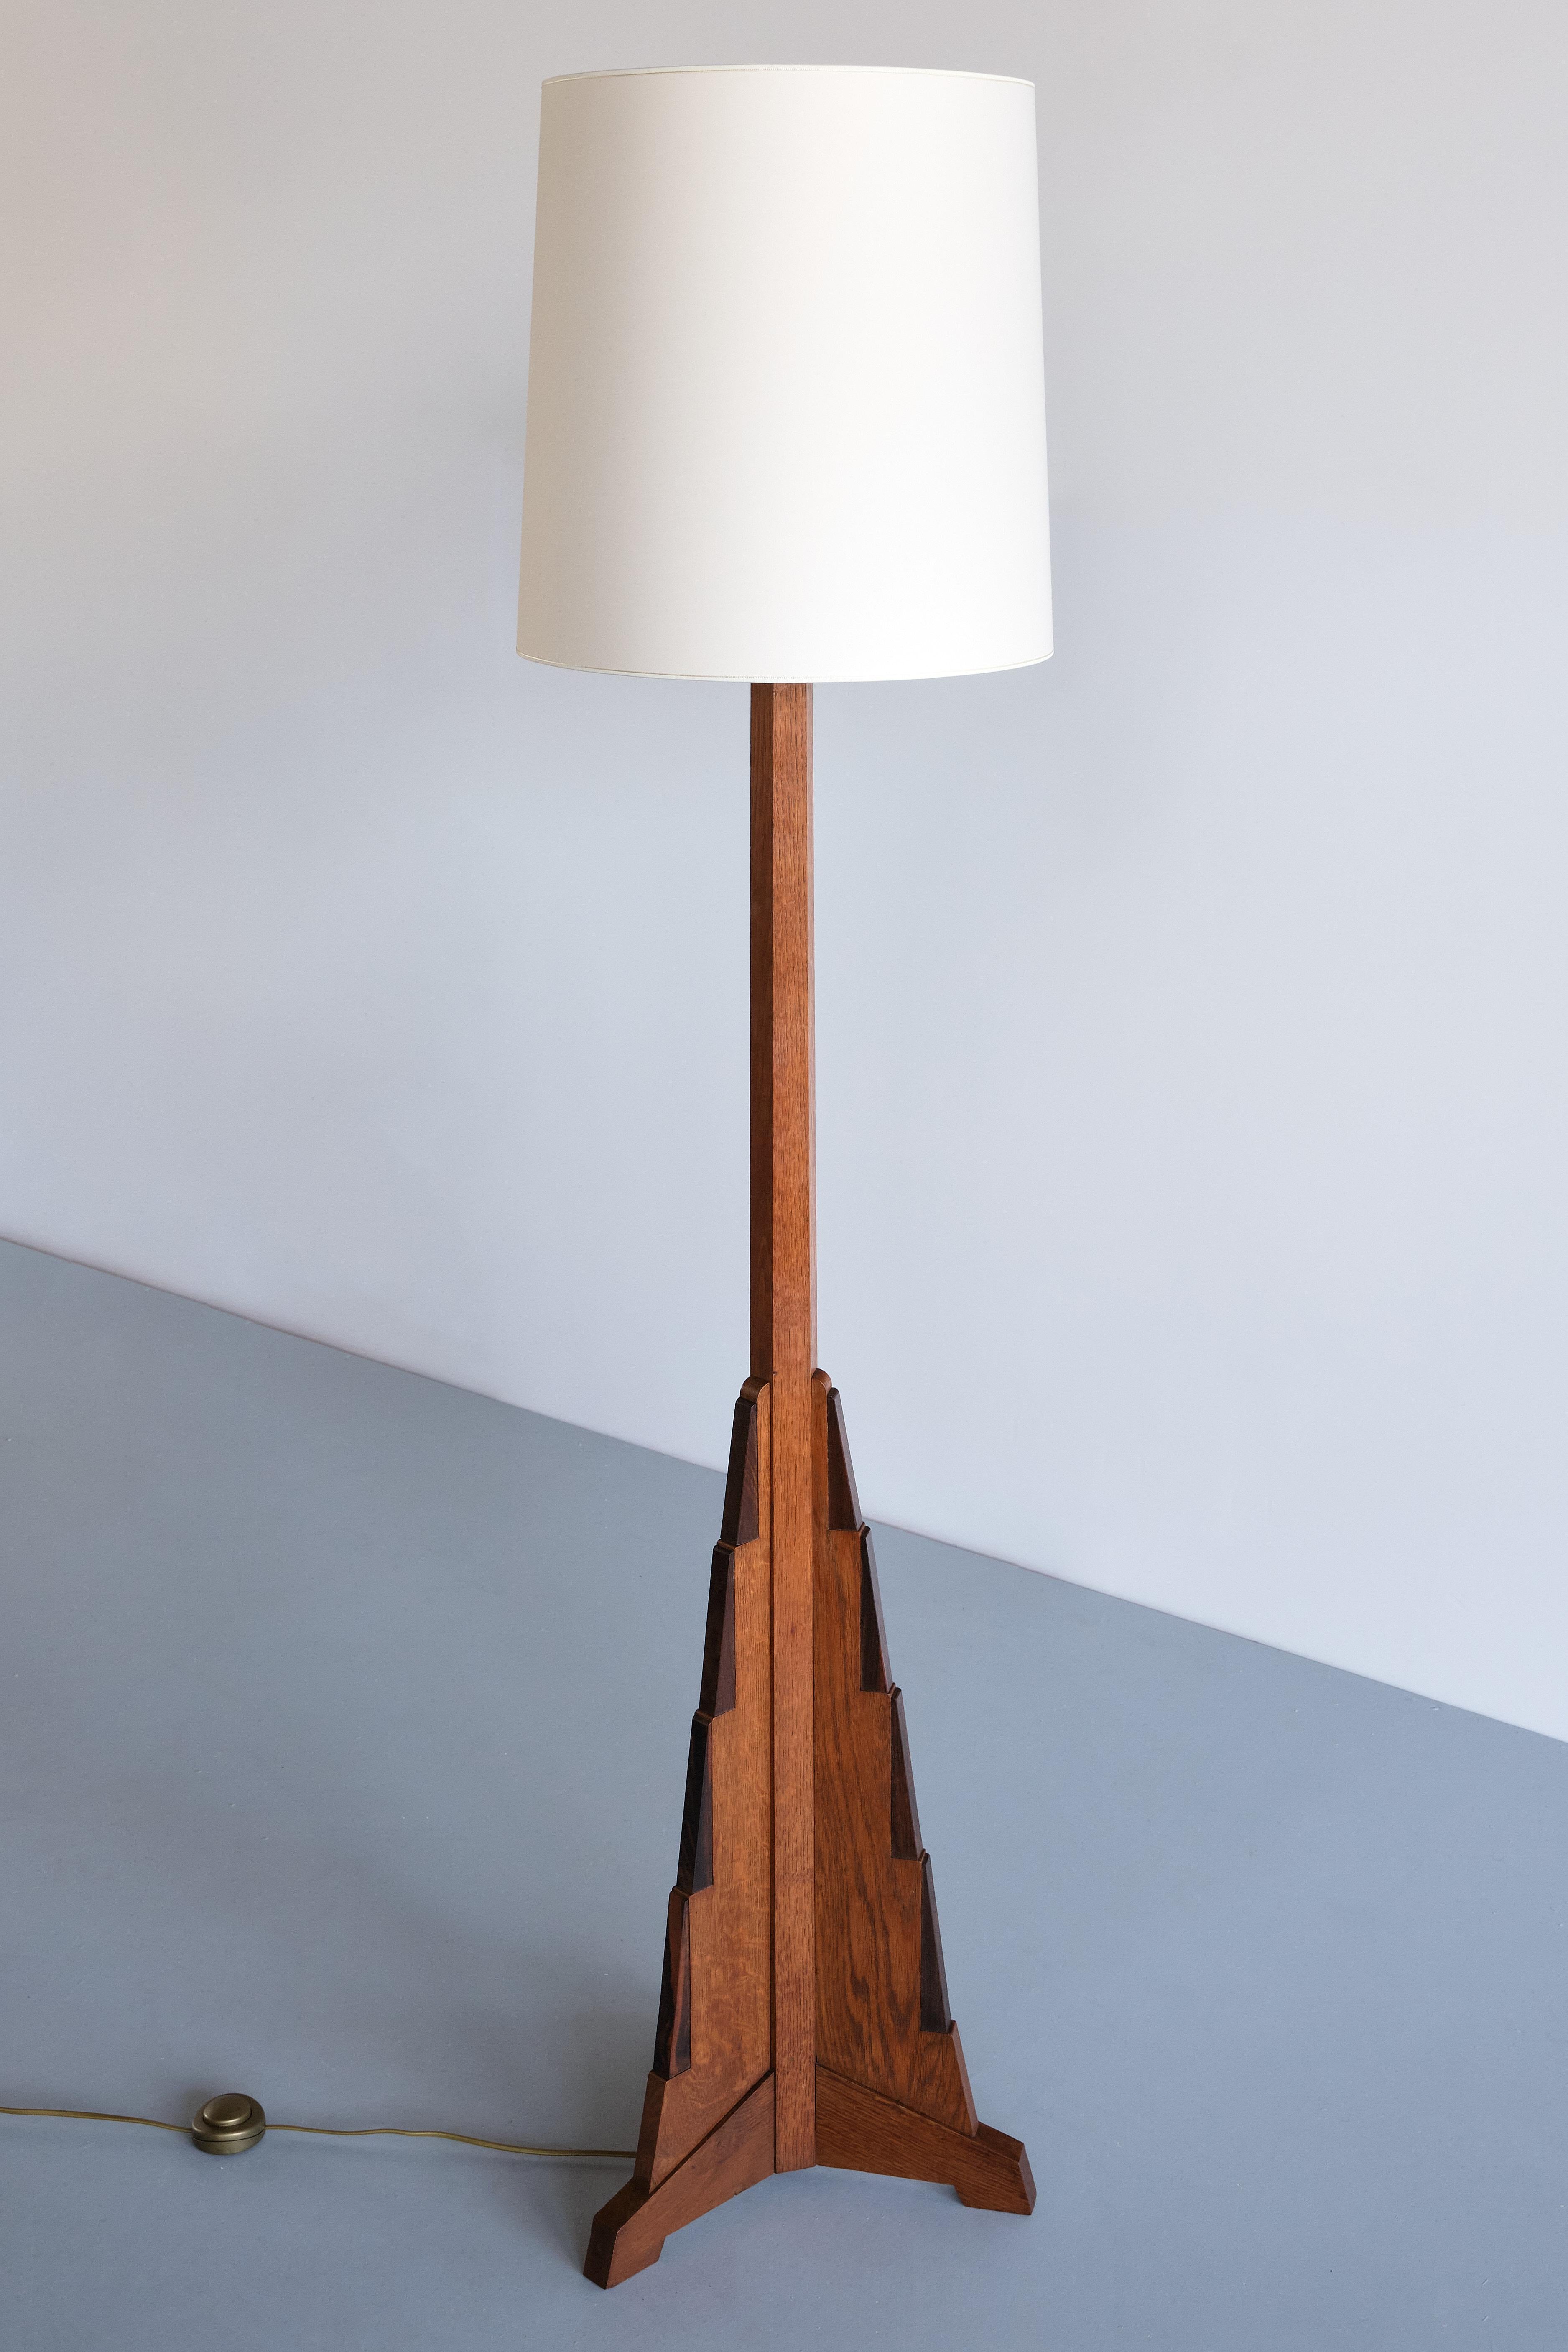 Mid-20th Century Cor Alons Art Deco Floor Lamp in Oak and Macassar Ebony, Netherlands, 1930s For Sale